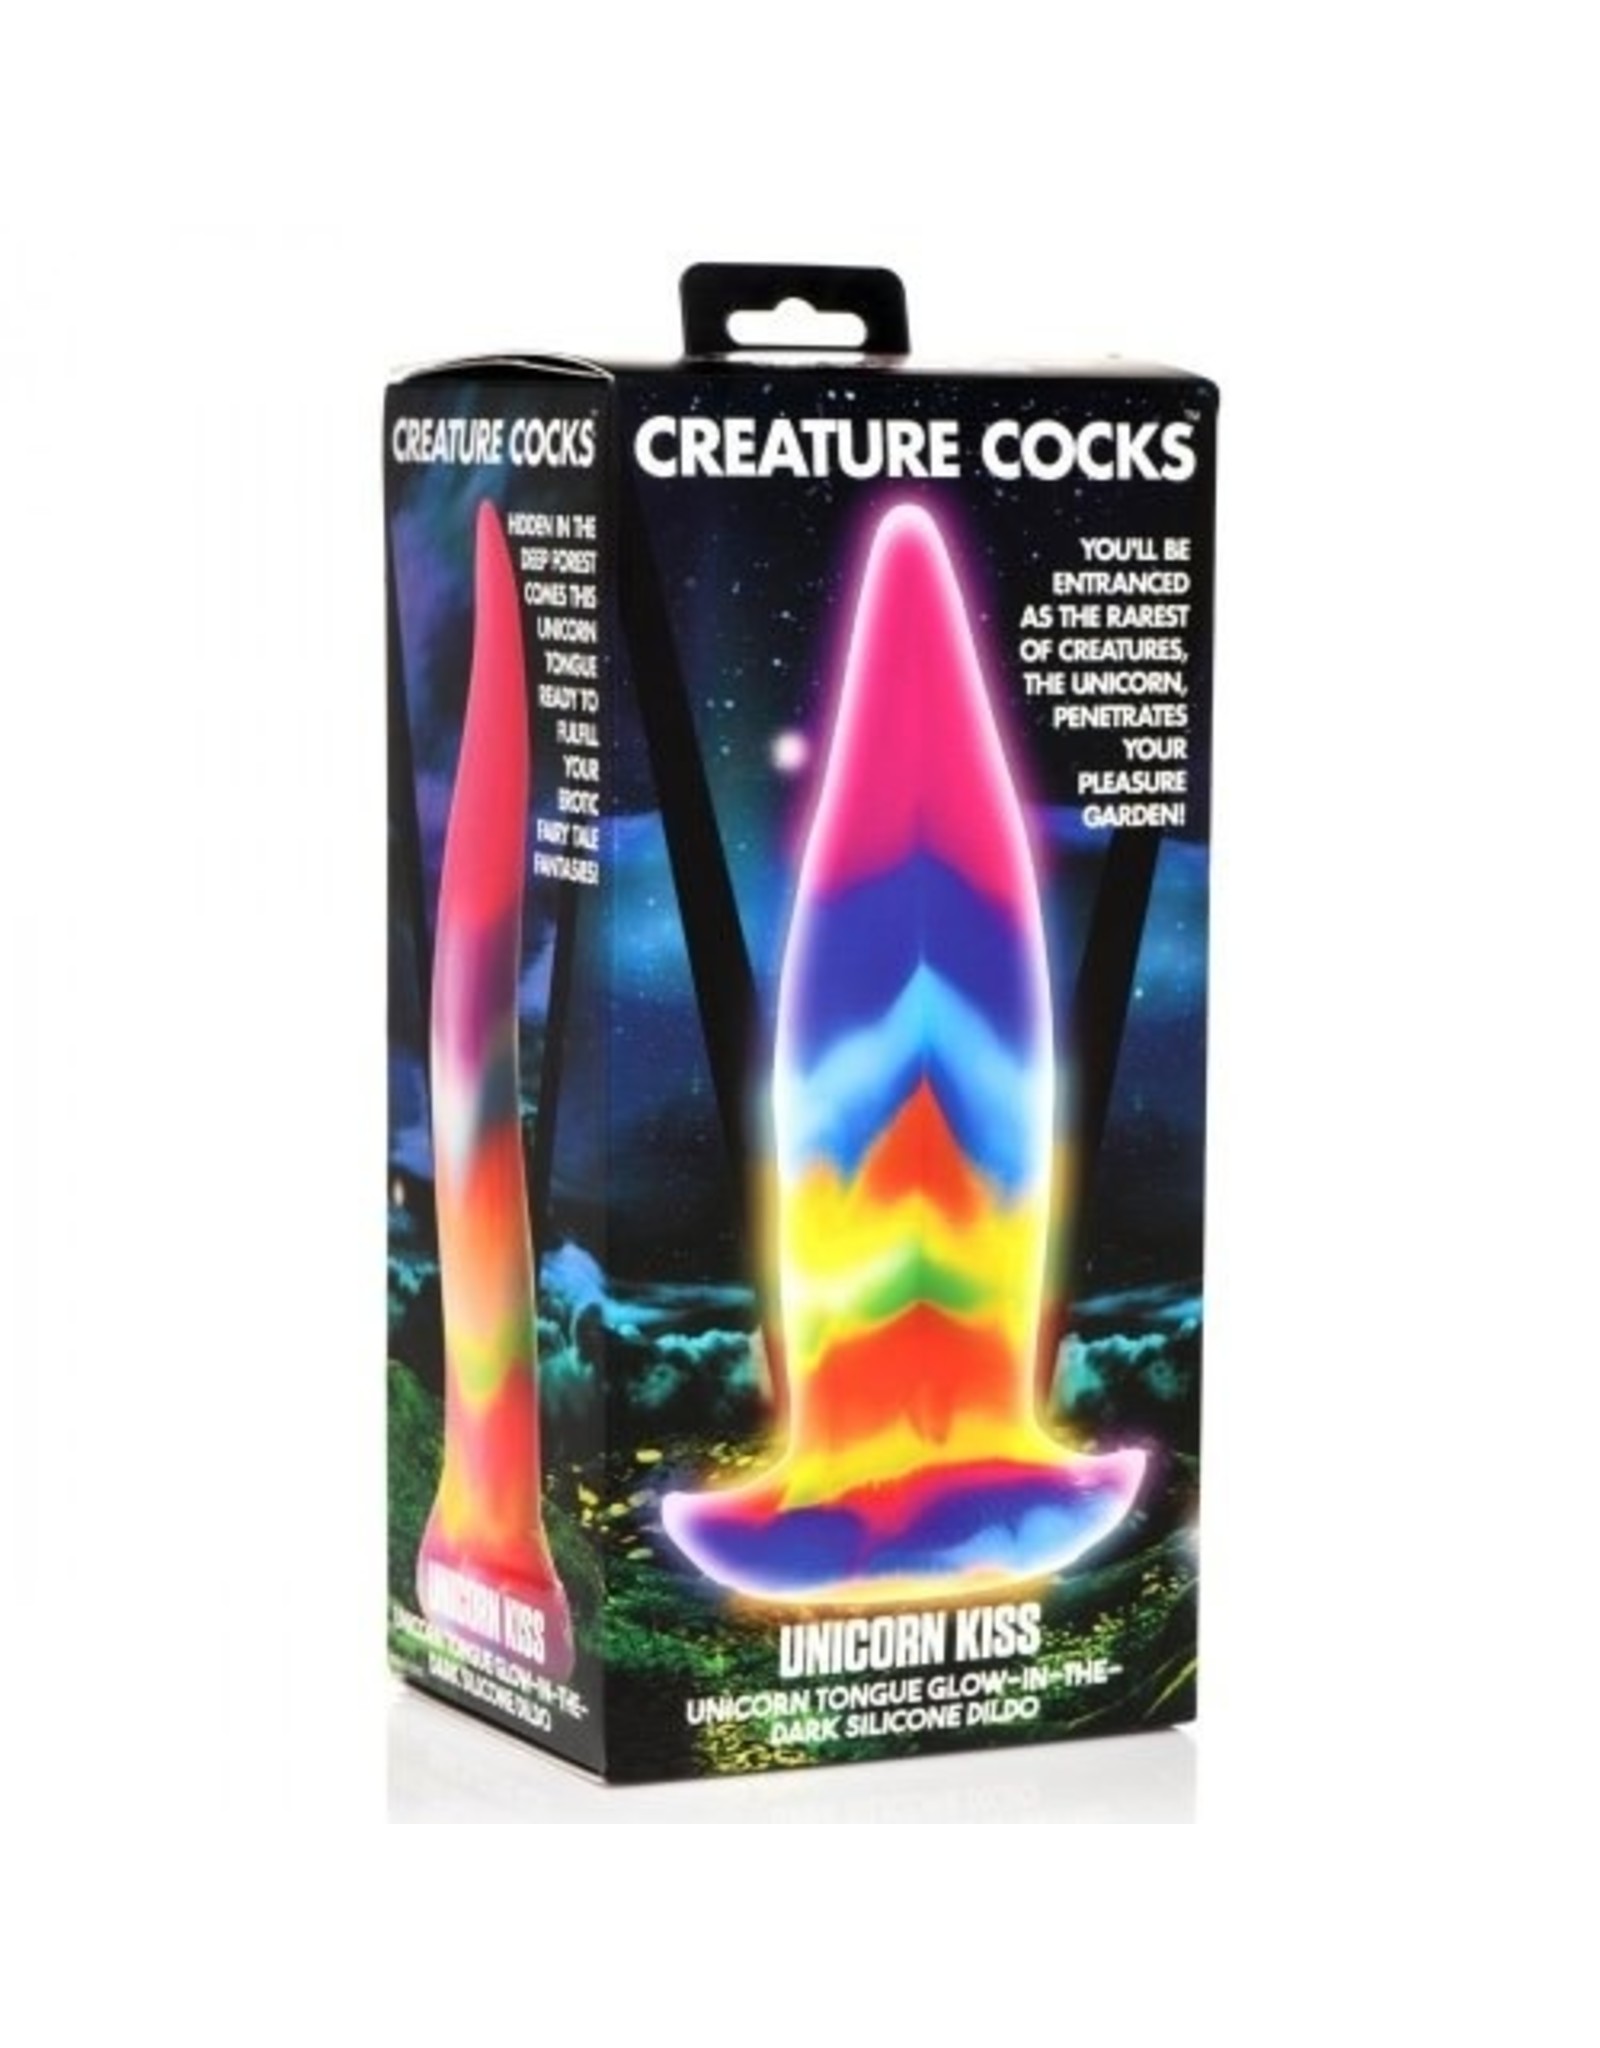 XR Brands Creature Cocks - Unicorn Kiss Tongue - Glow in the Dark Dildo